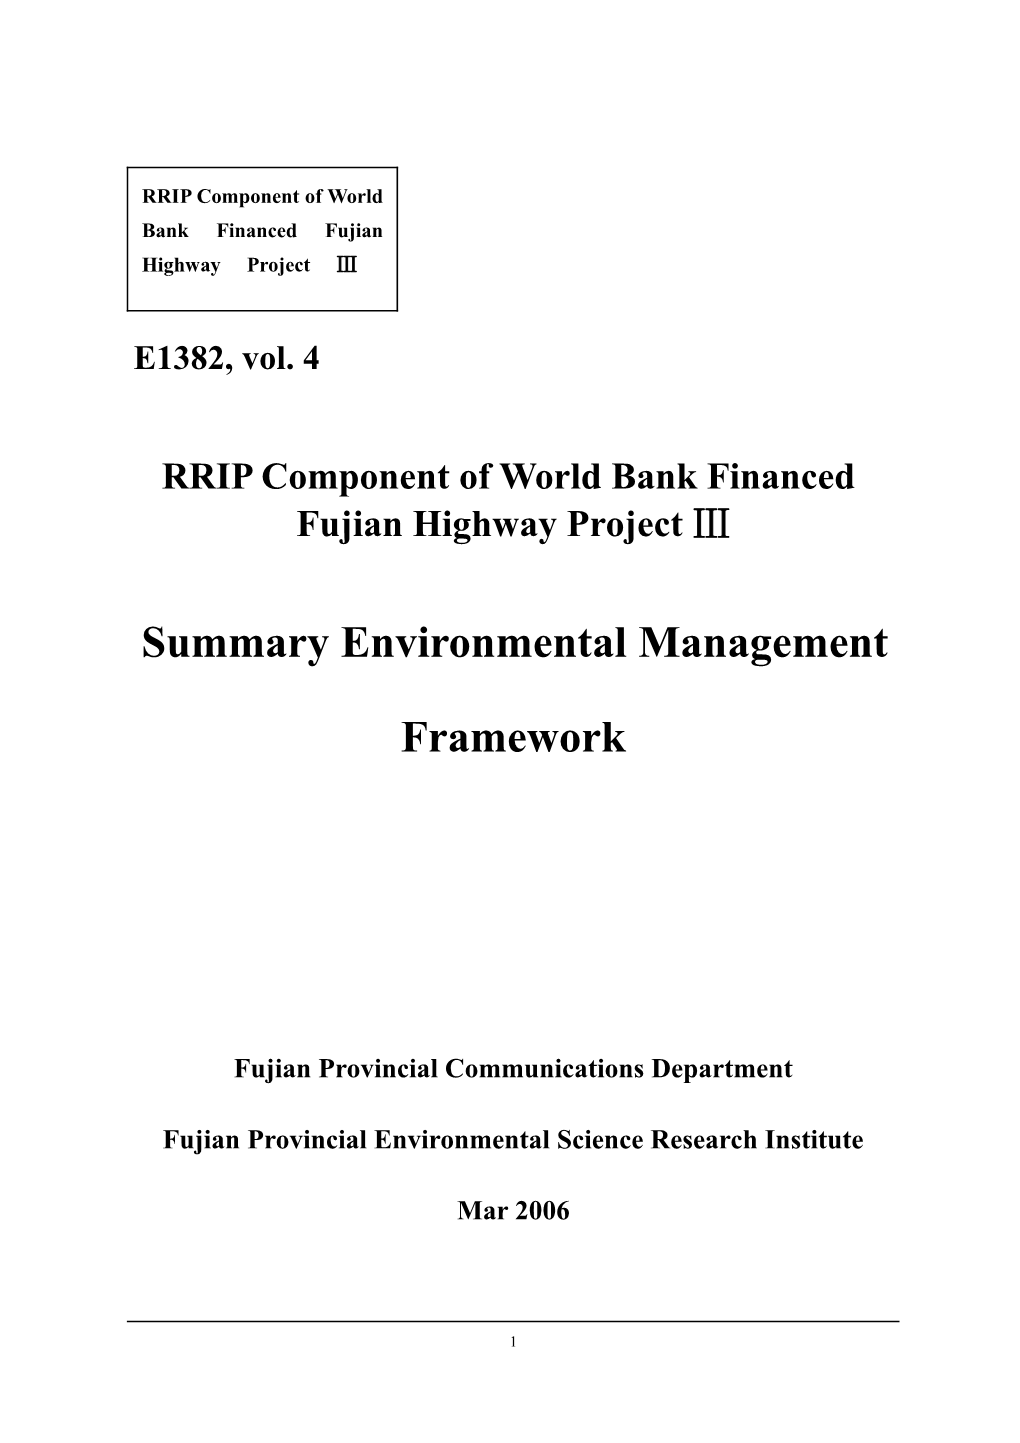 RRIP Component of World Bank Financed